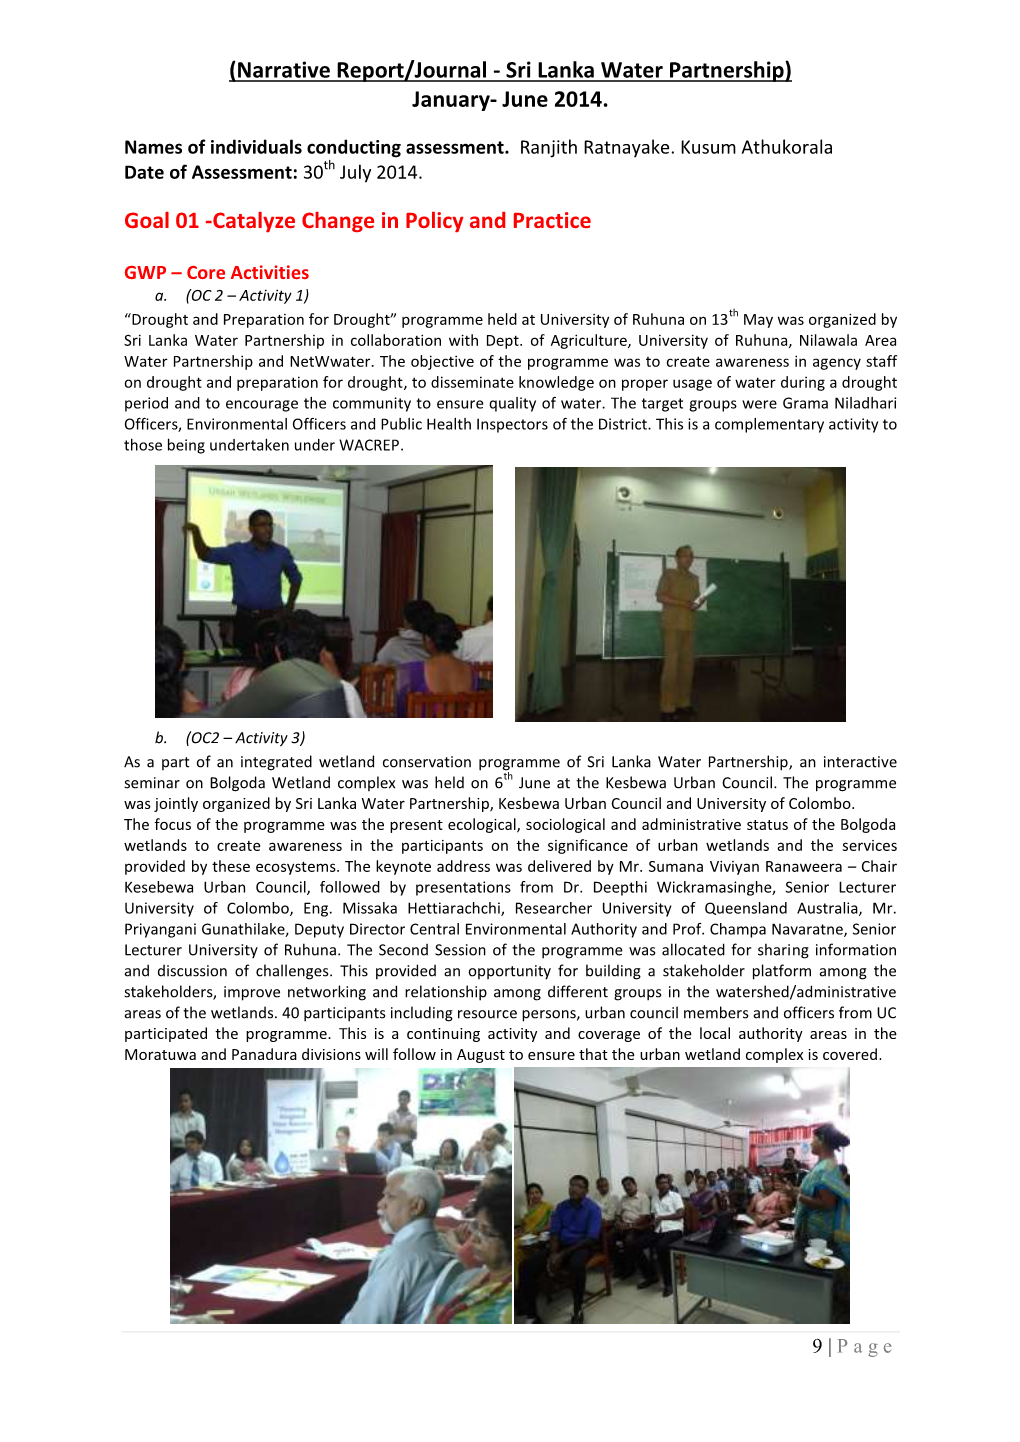 (Narrative Report/Journal - Sri Lanka Water Partnership) January- June 2014